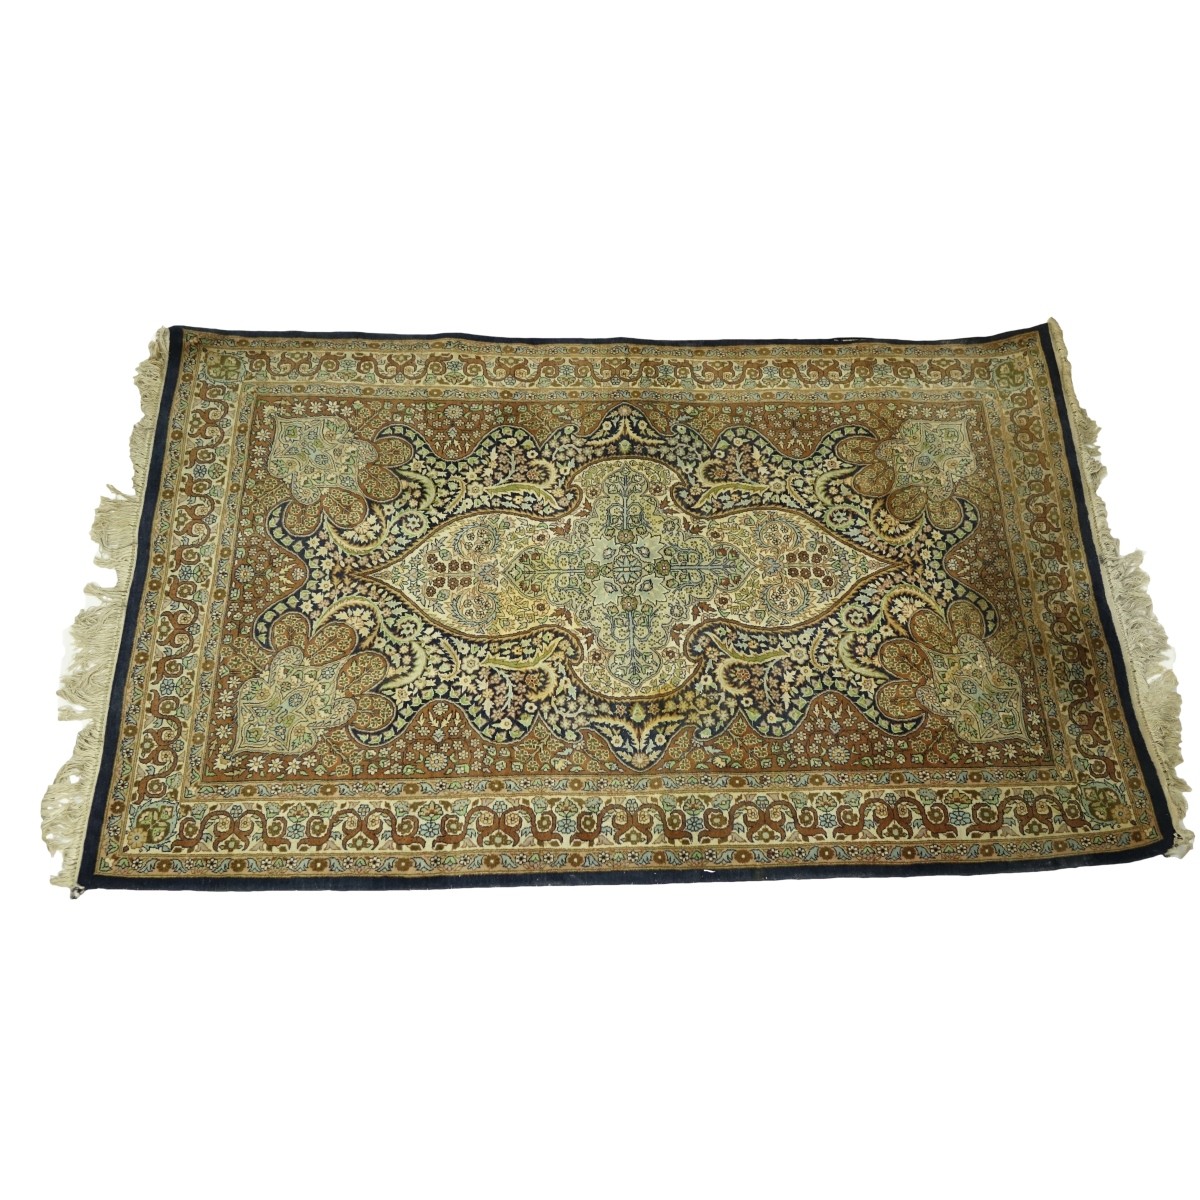 Semi Antique Persian Rug. Intricate floral pattern